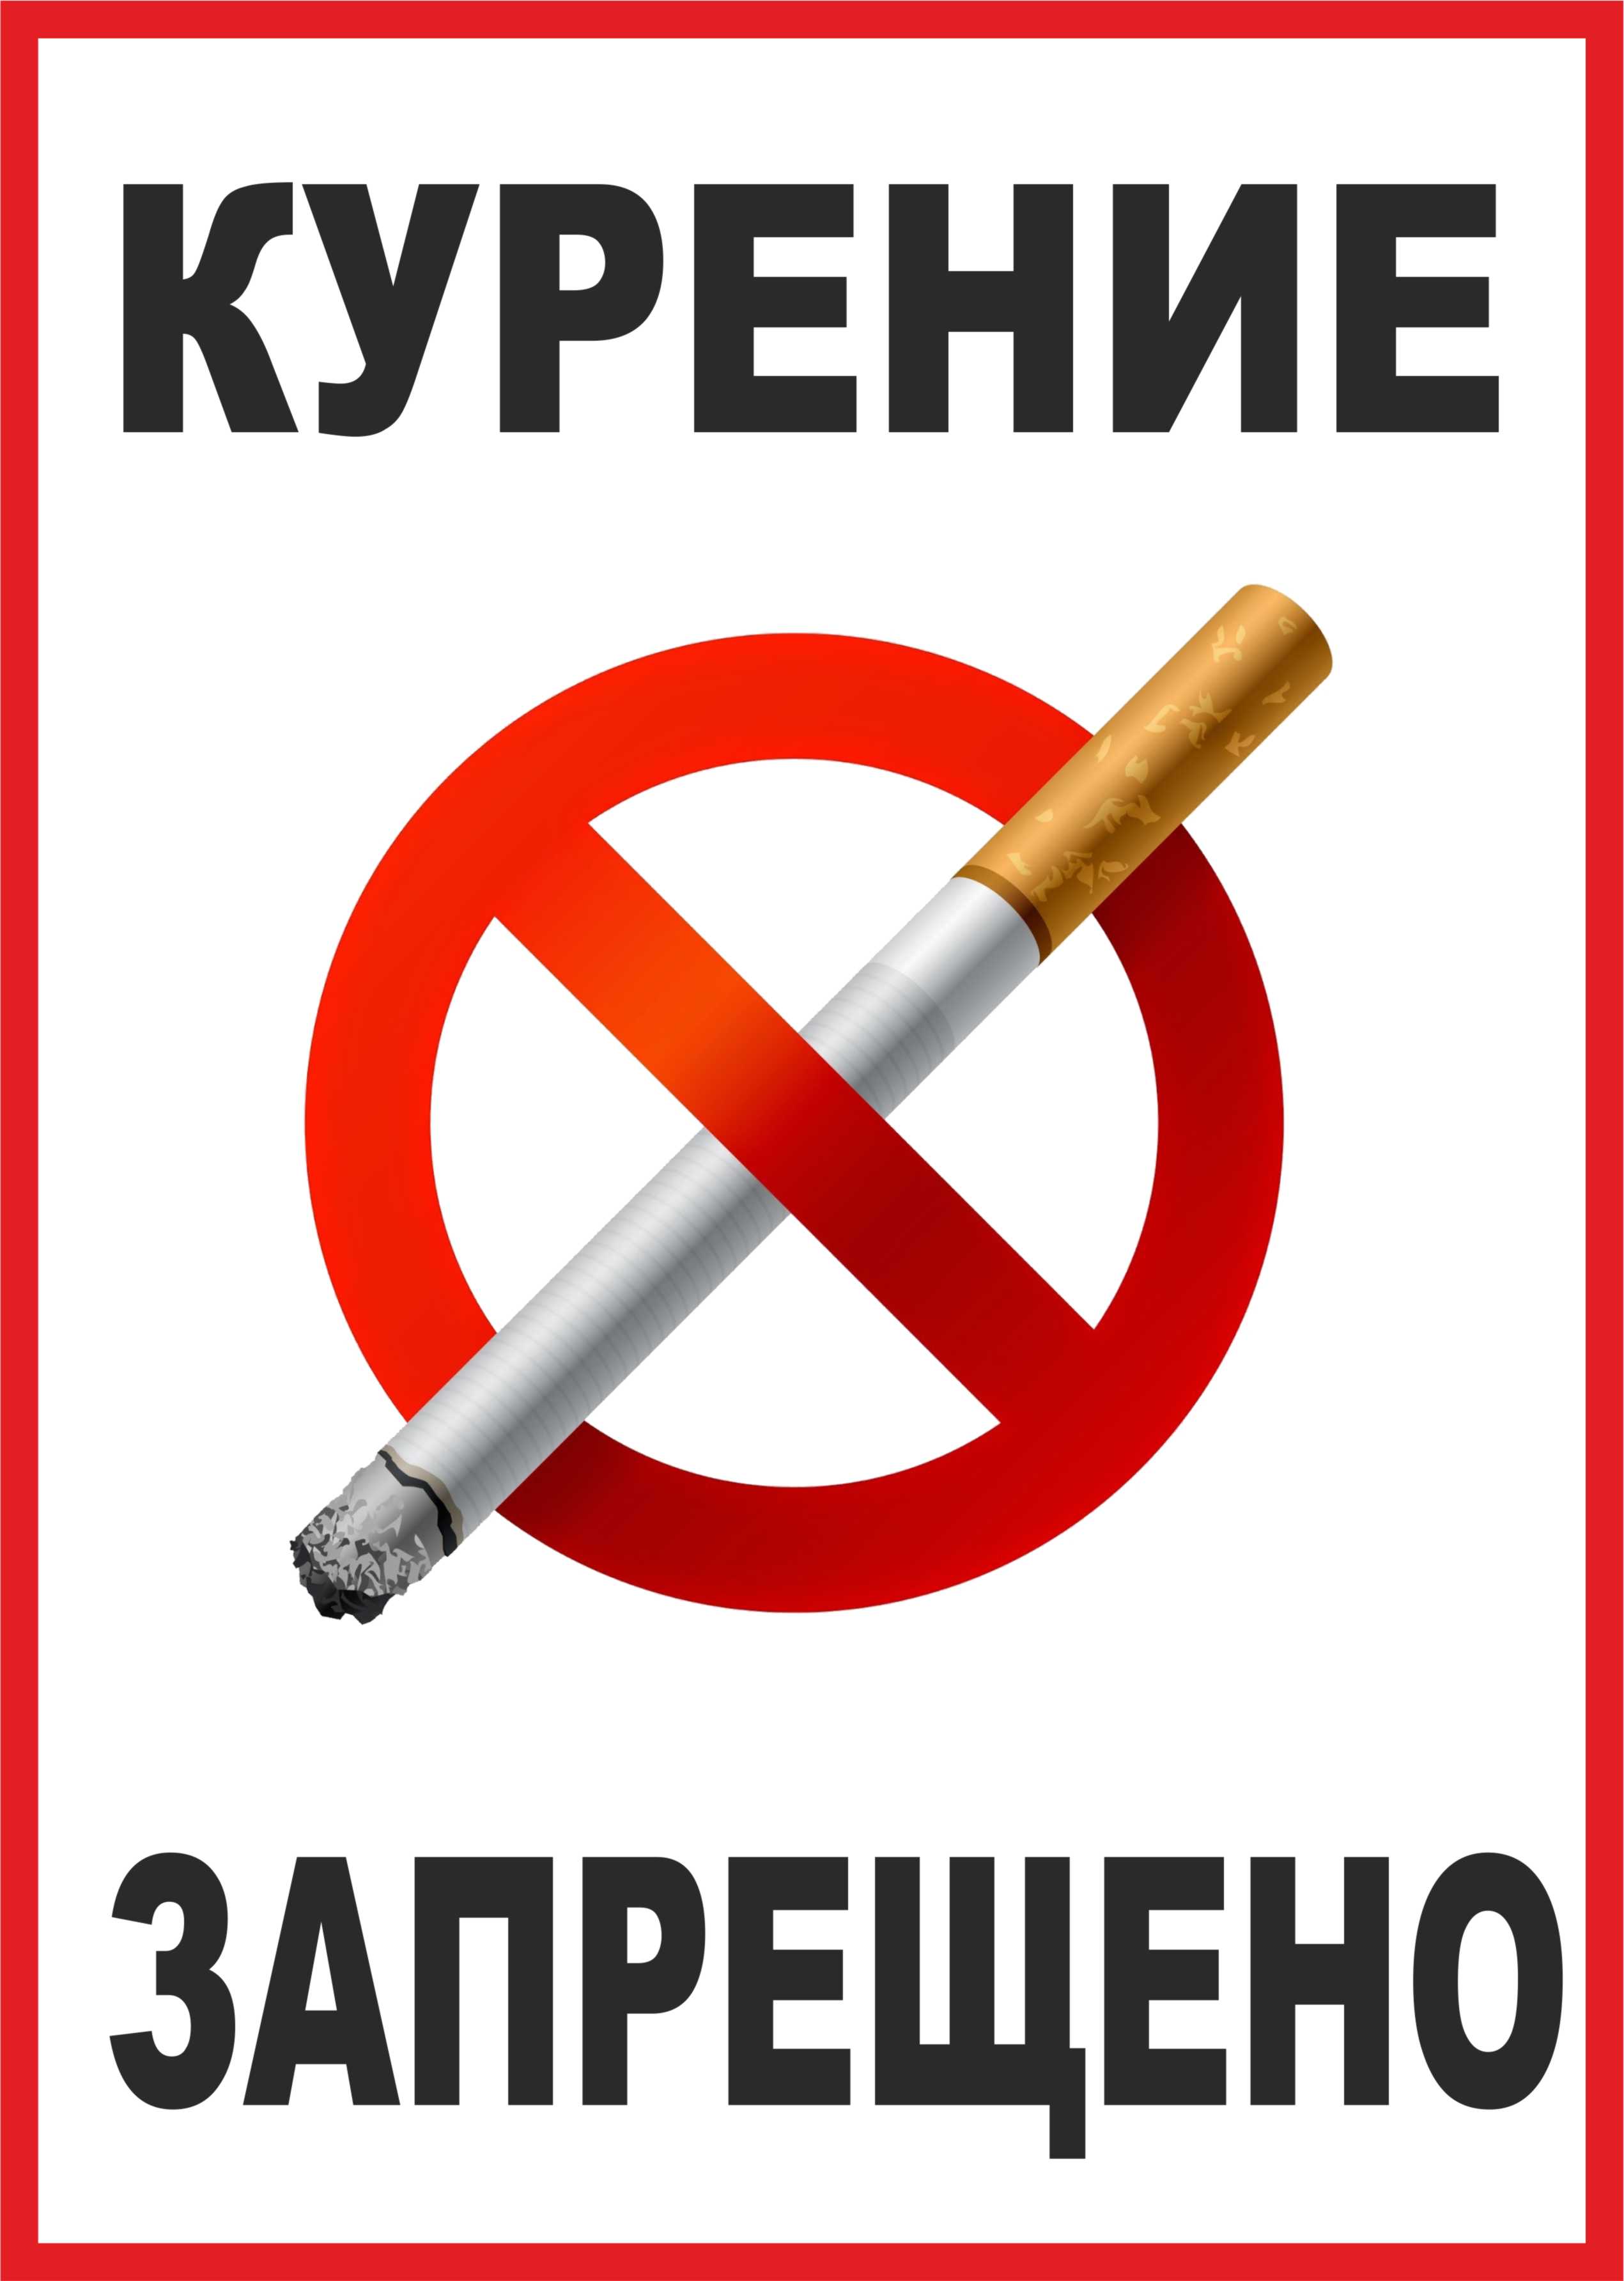 Не курим ру форум. Курить запрещено знак по ГОСТУ. Курение сигаретузапрещено табличка. Табличка курит запрешен. Табличка "не курить".